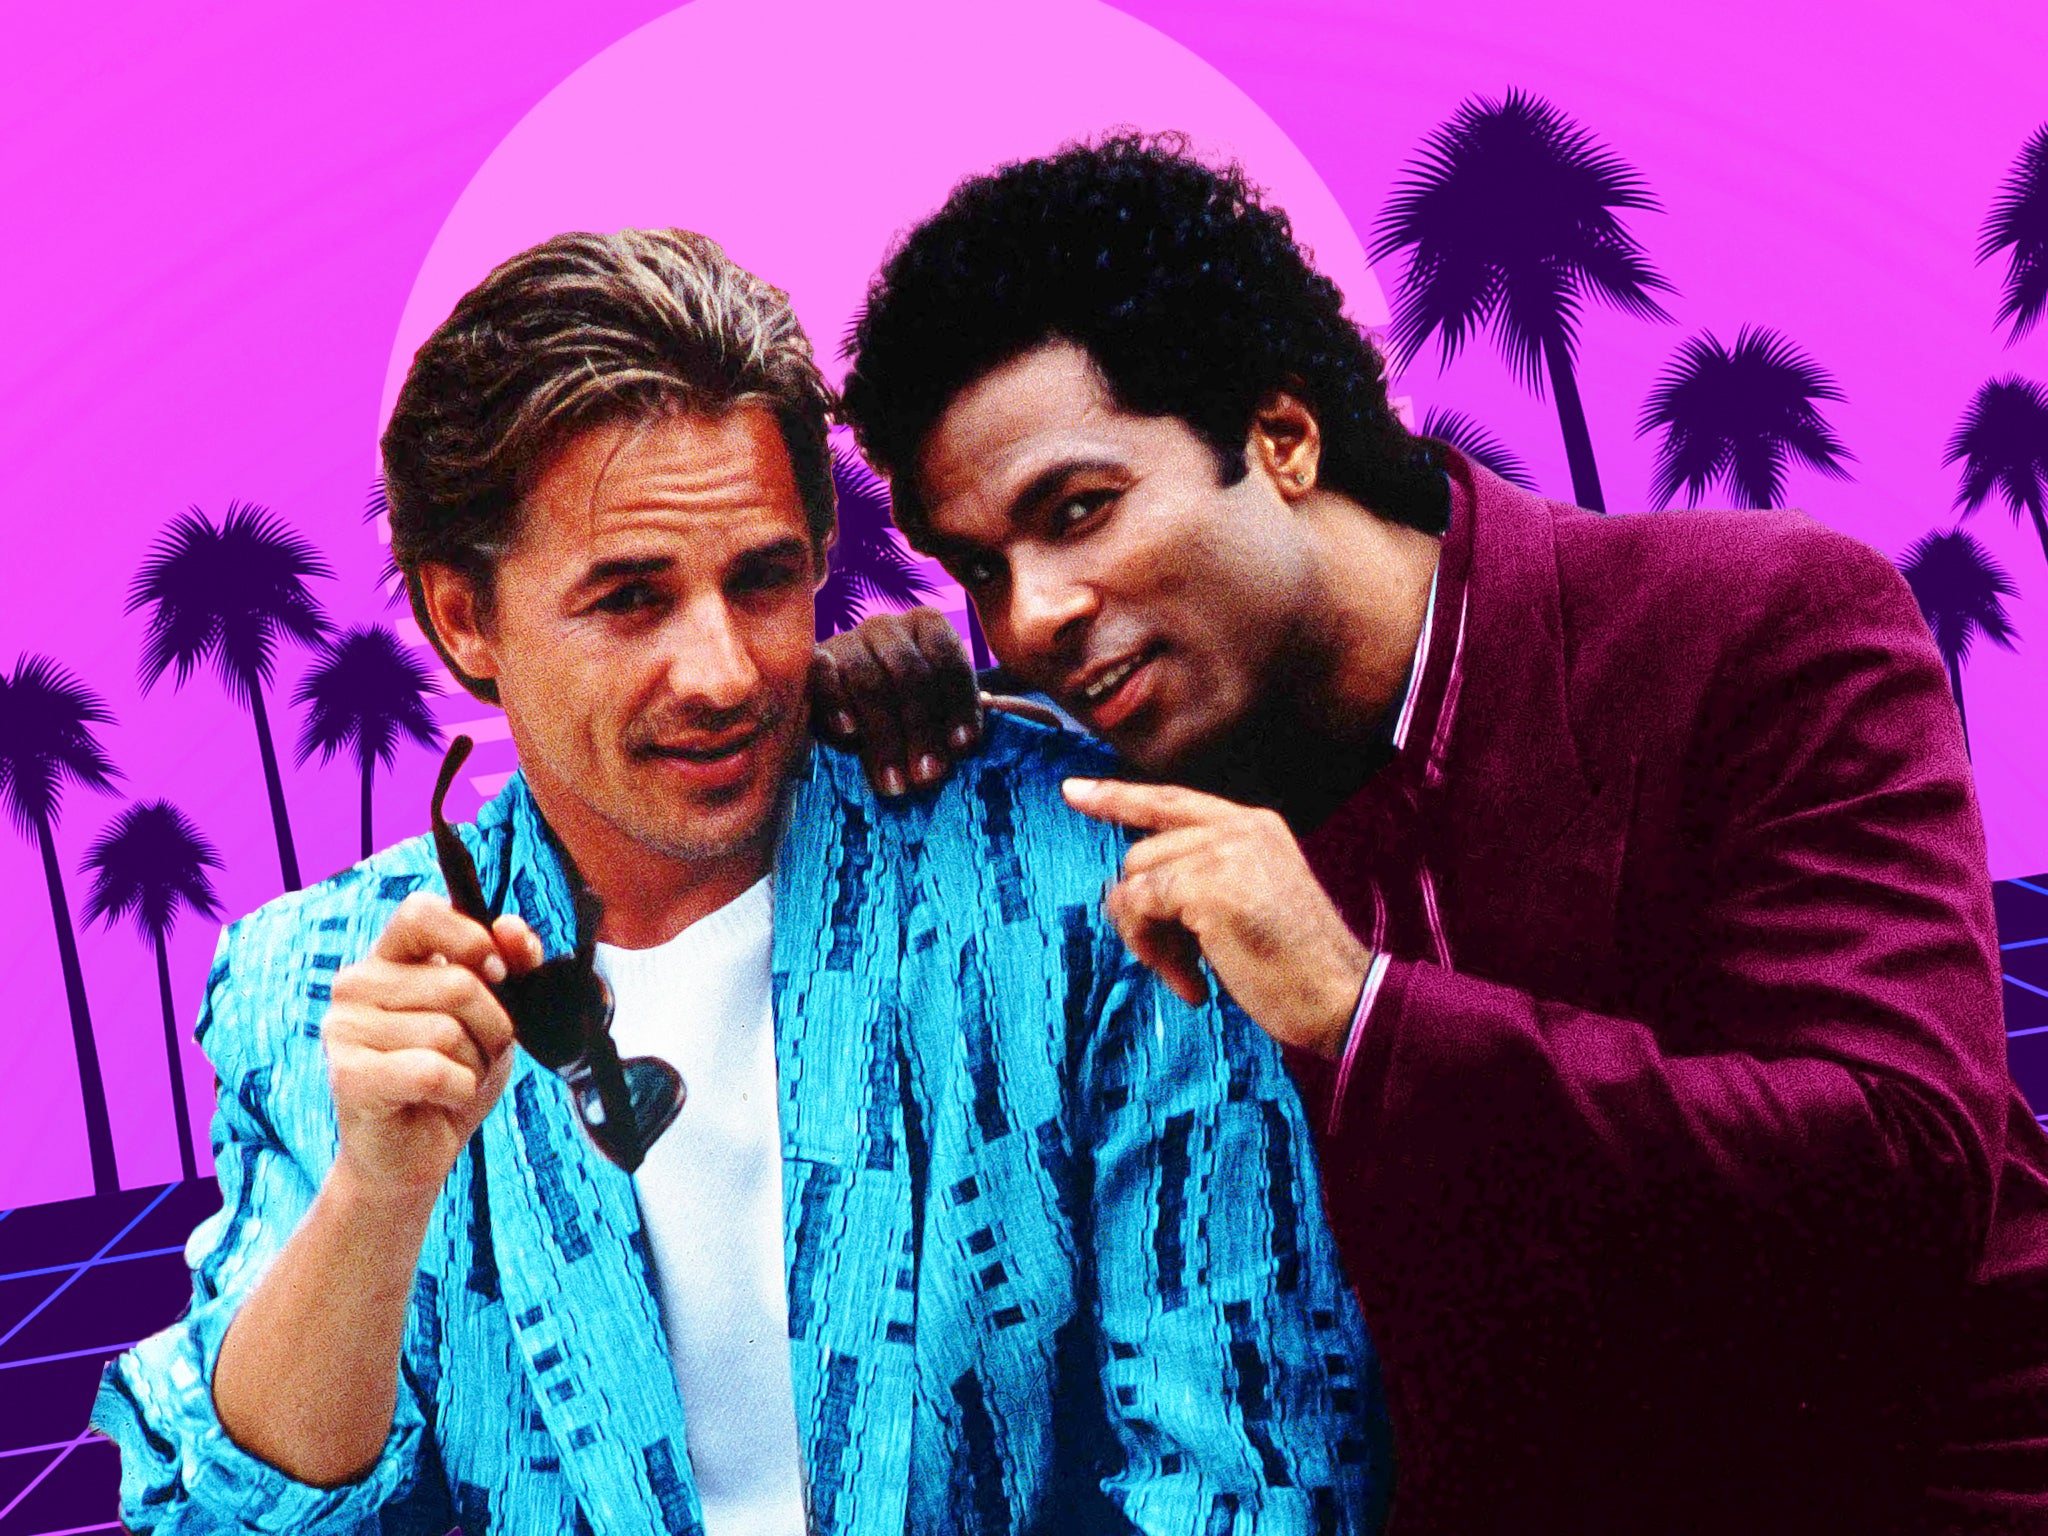 Don Johnson (left) and Philip Michael Thomas, as James ‘Sonny’ Crockett and Ricardo Tubbs